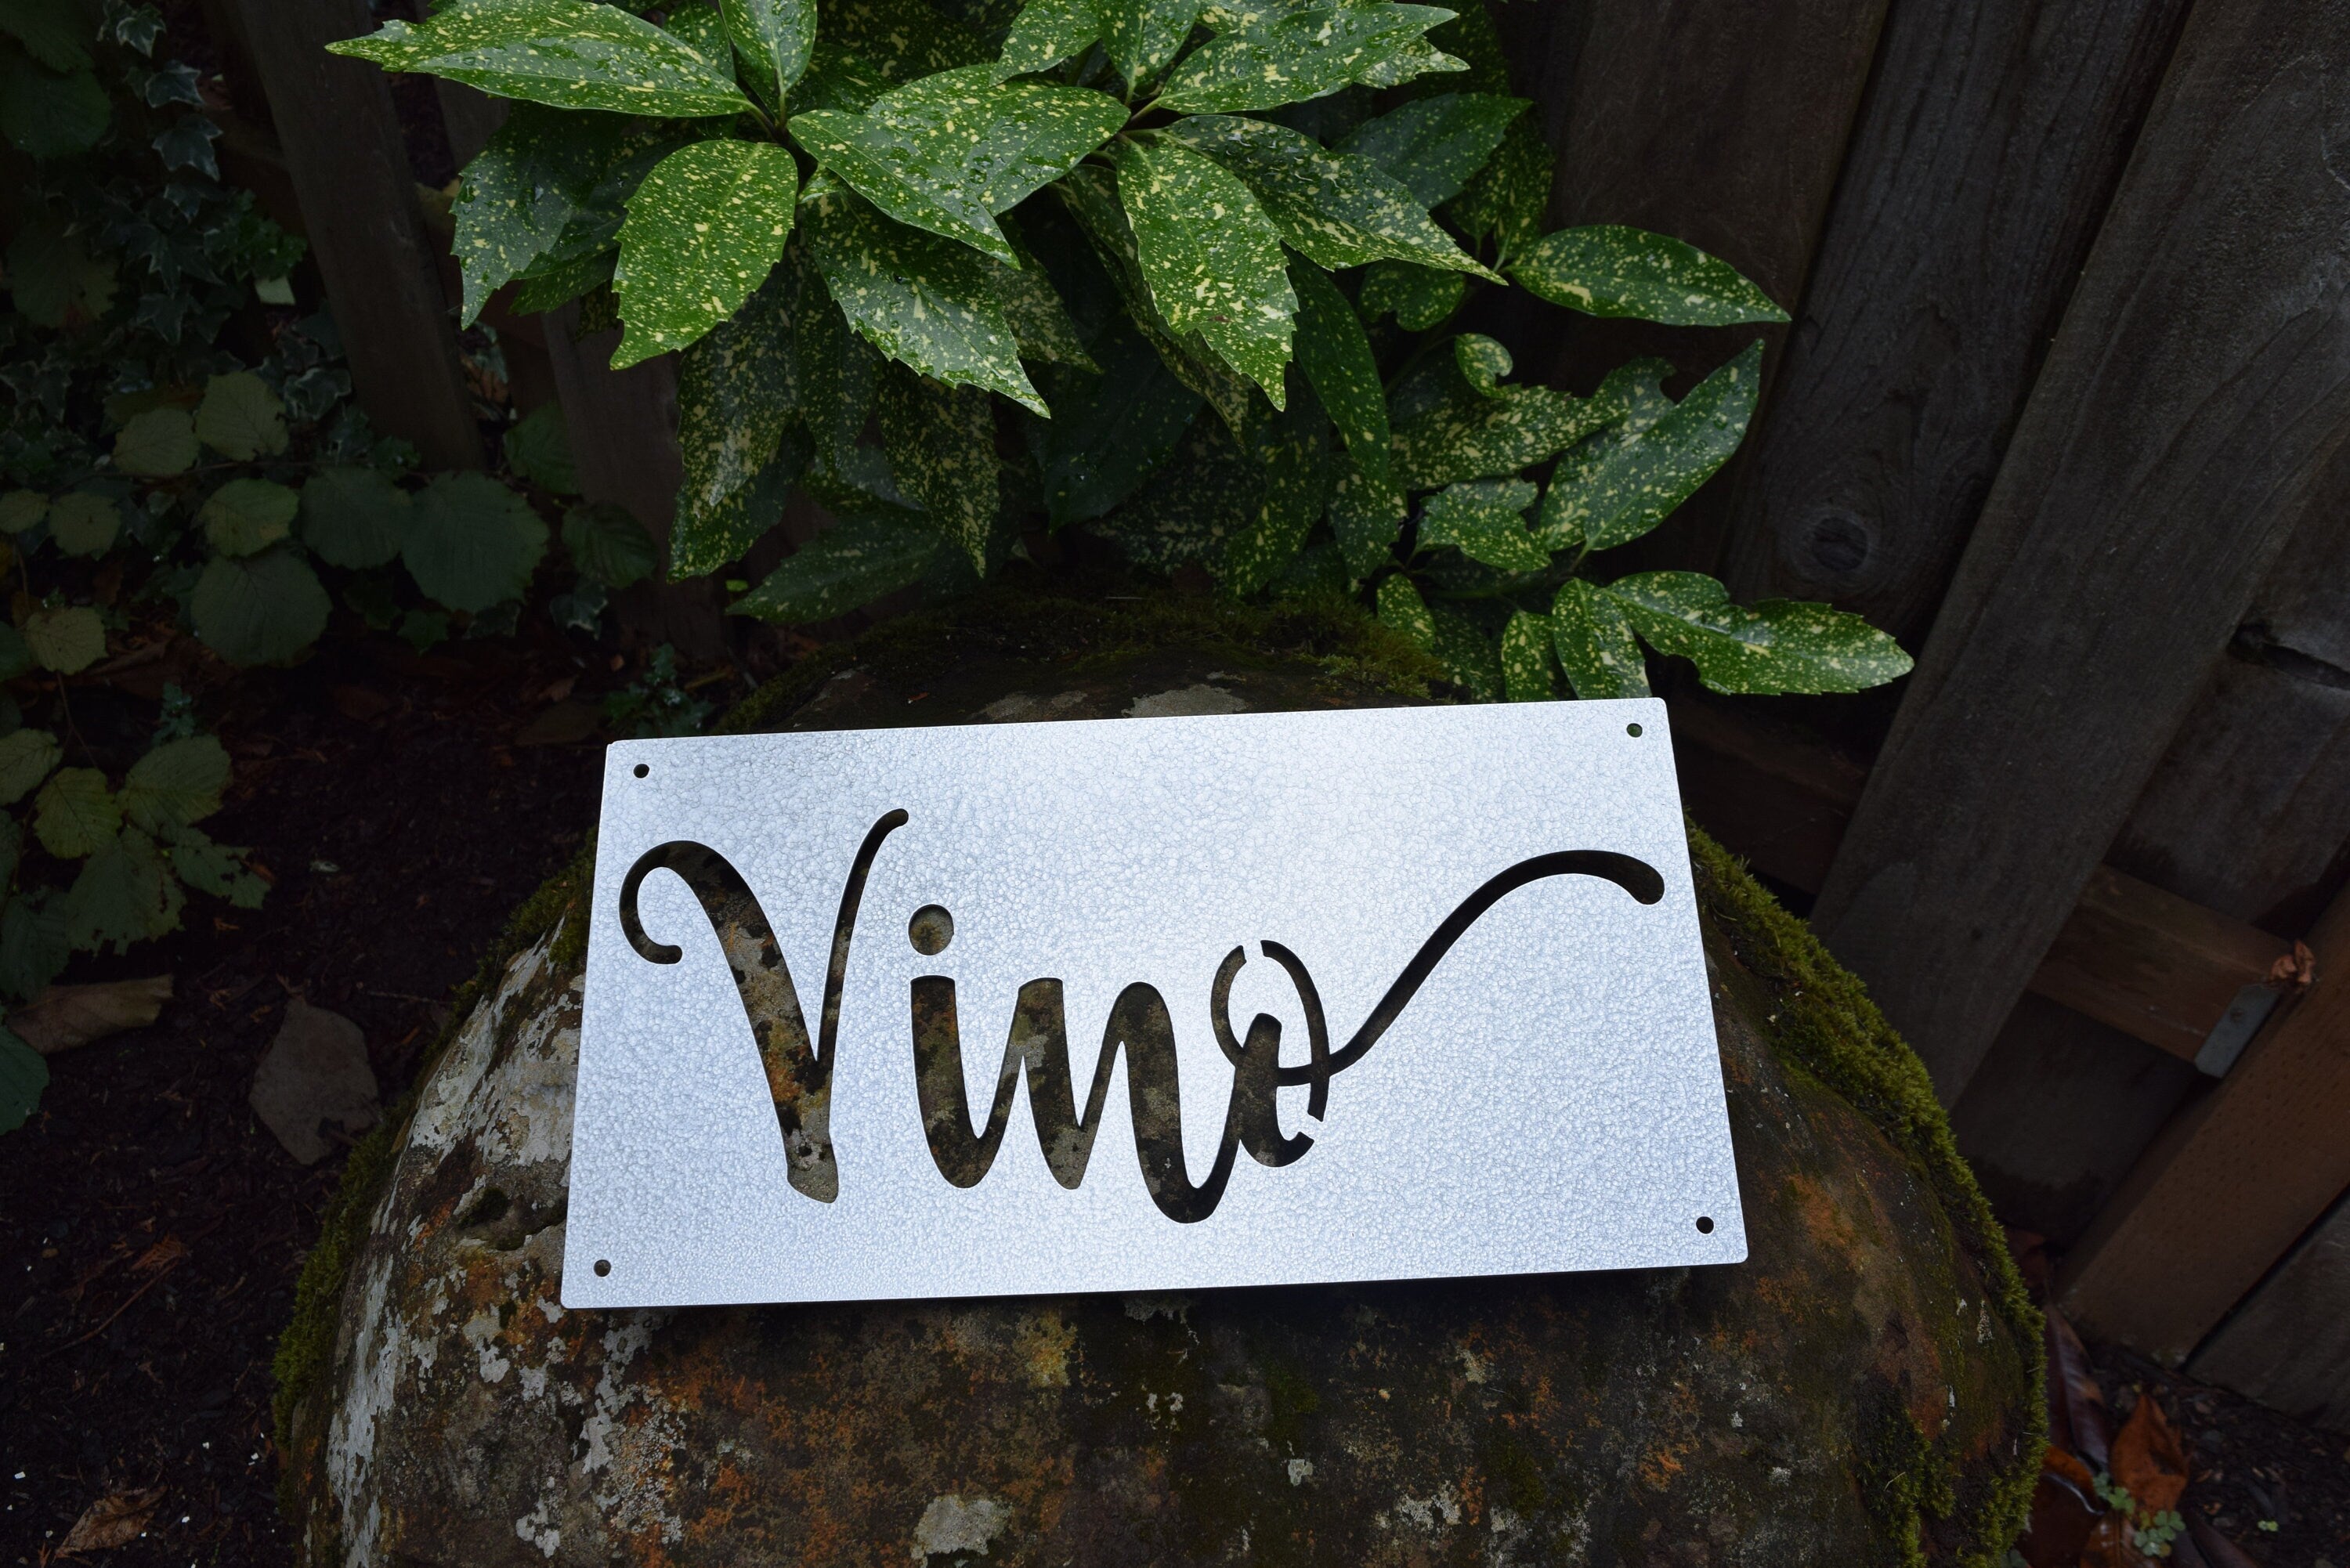 Wine Script Sign